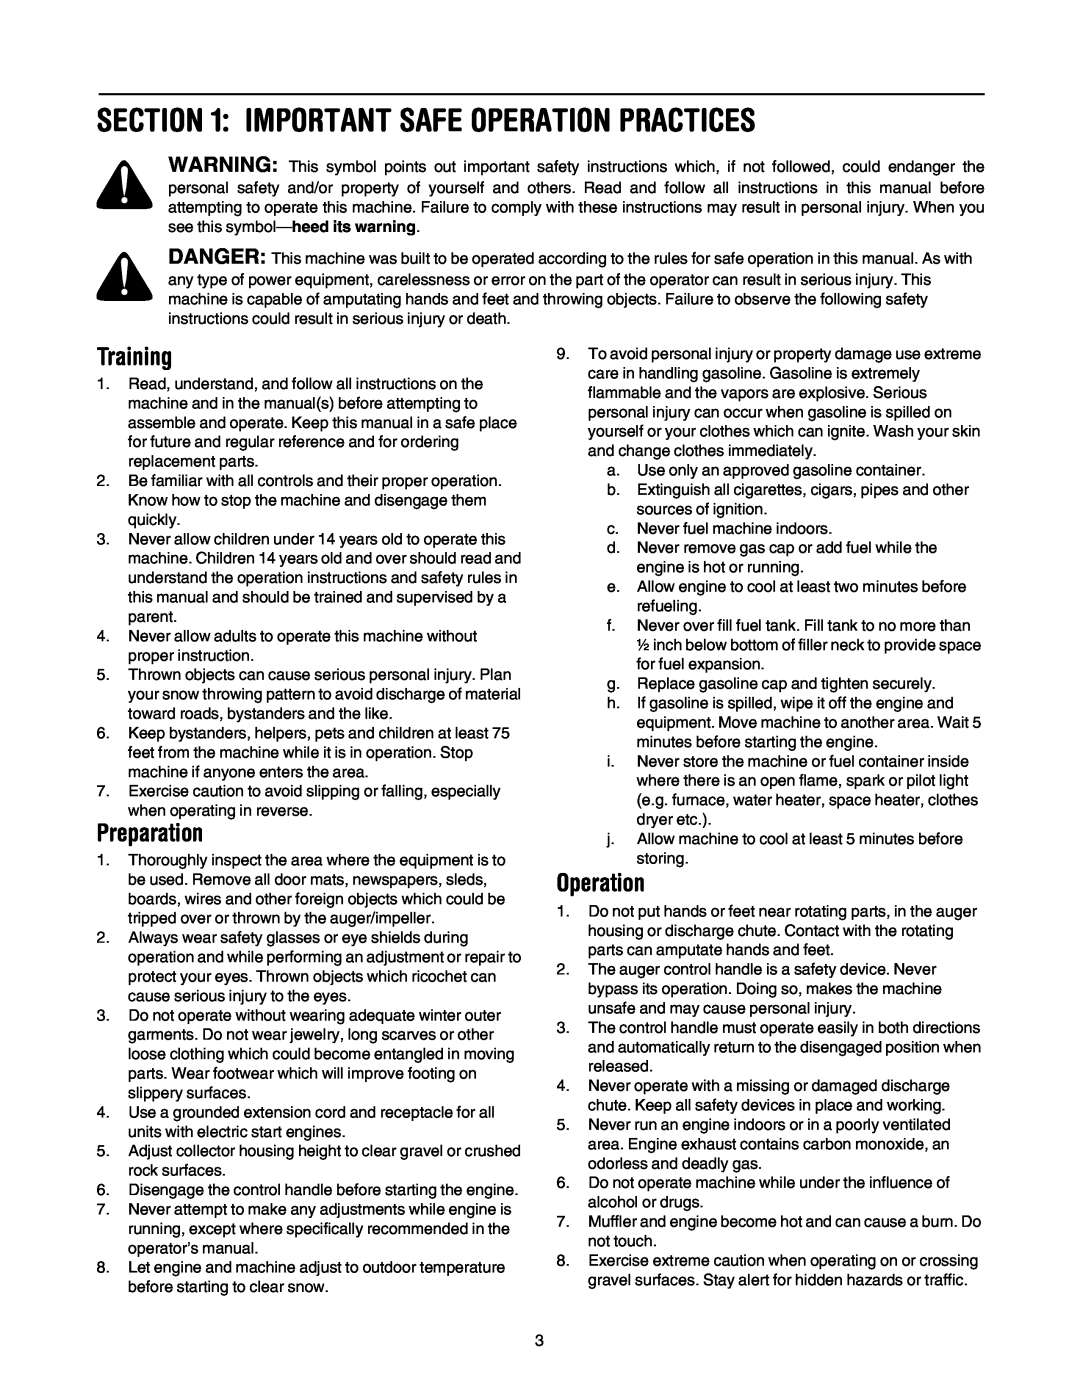 Troy-Bilt OEM-390-679 manual Important Safe Operation Practices, Training, Preparation 